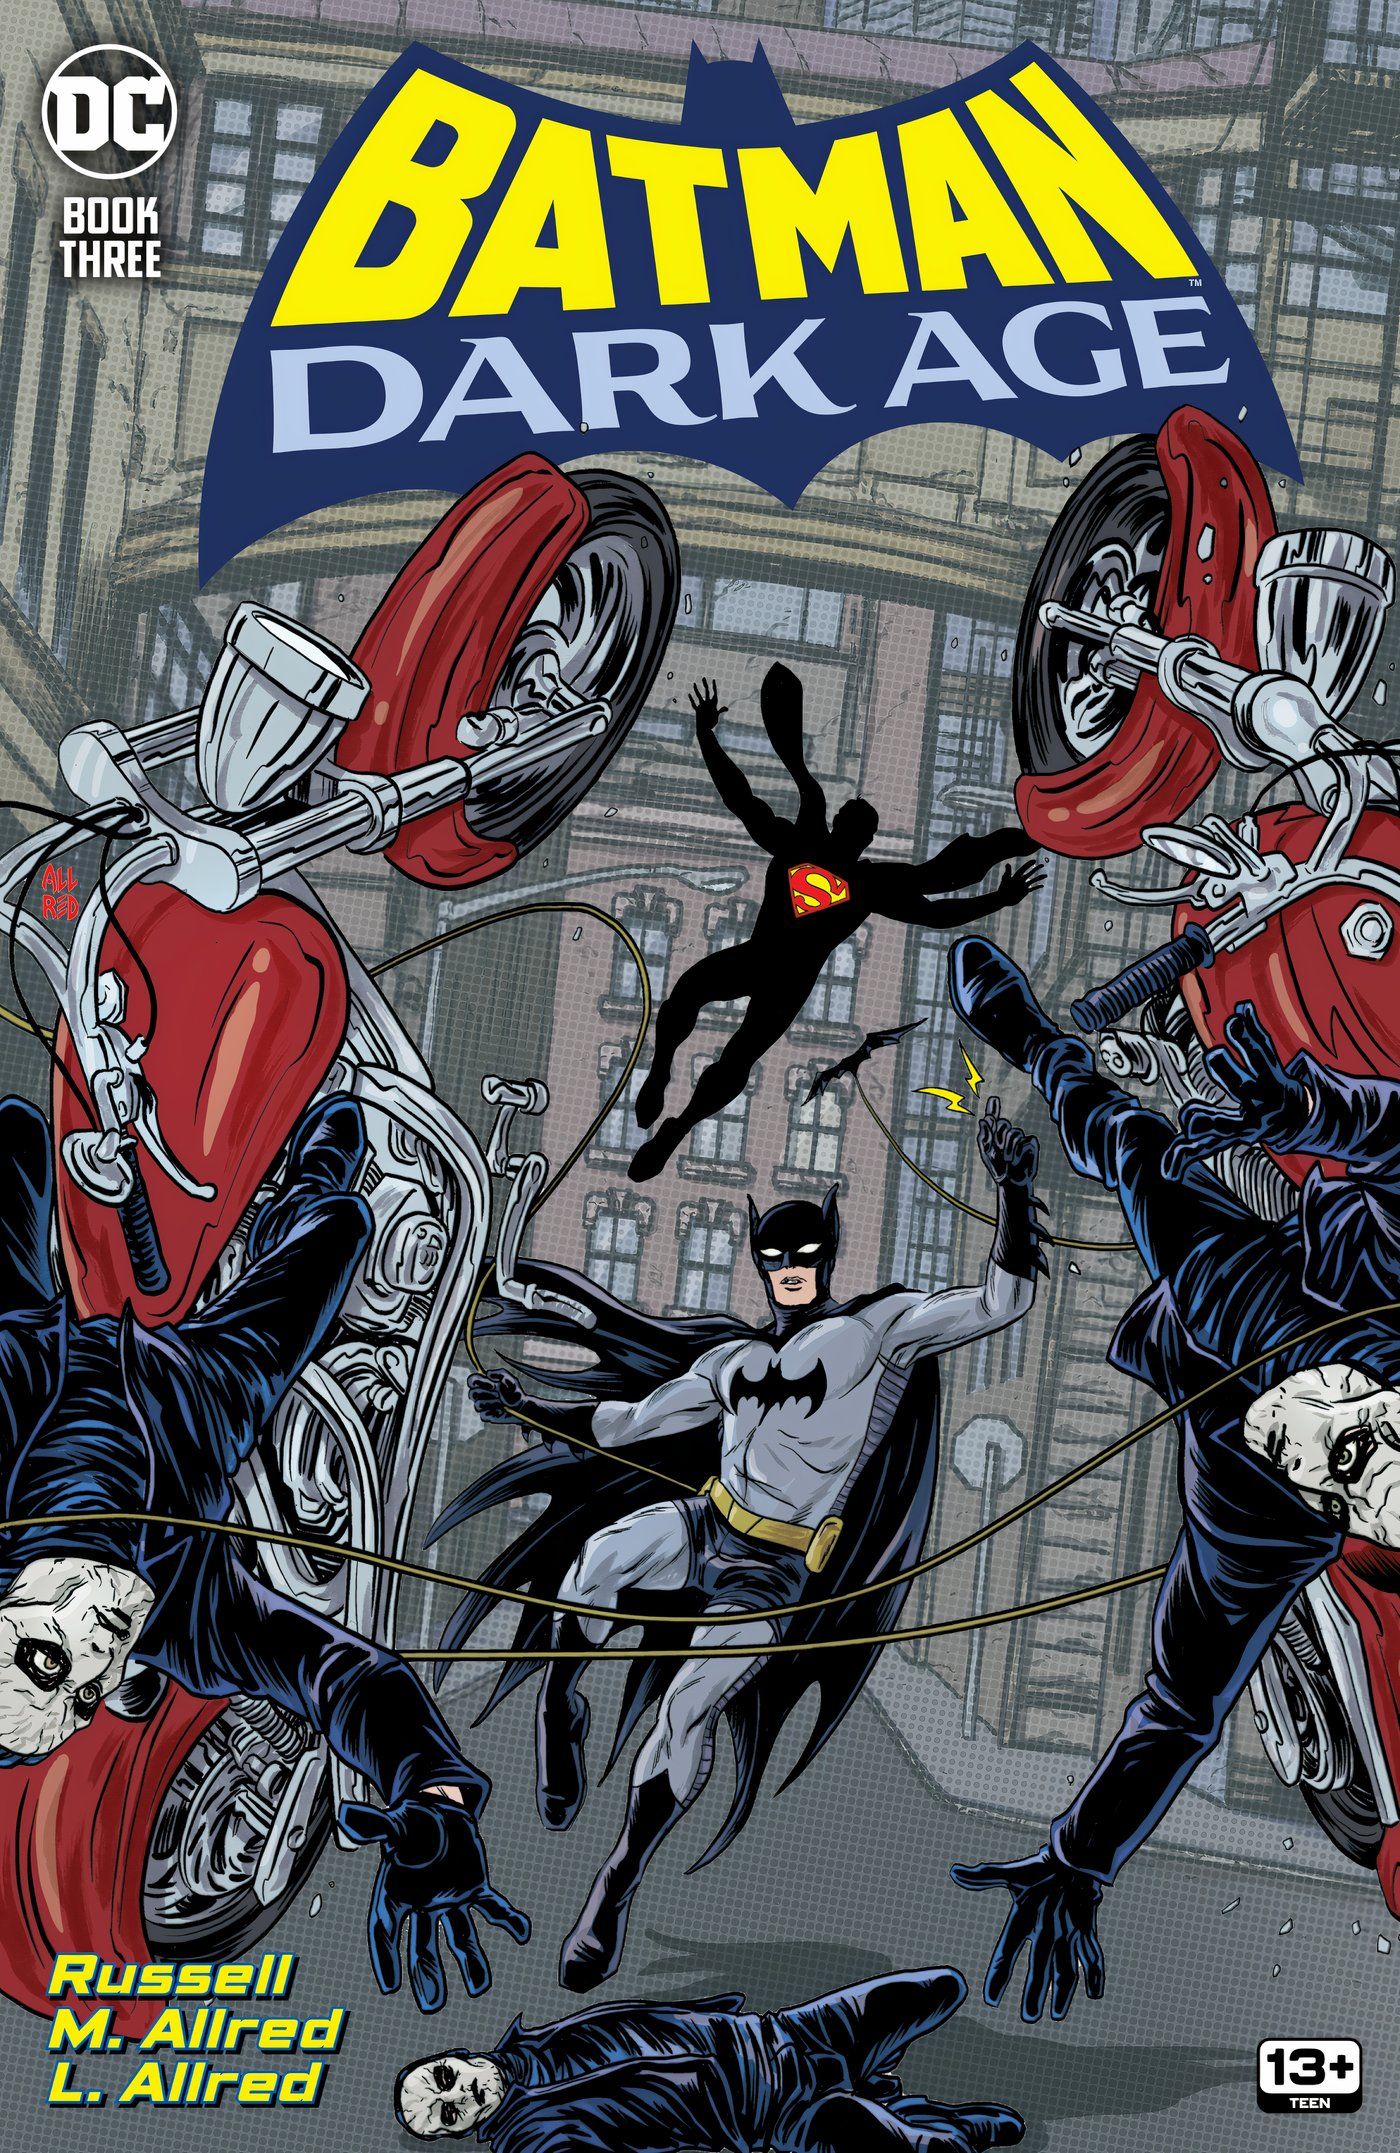 Batman Dark Age 3 Main Cover: Batman fighting goons on motorcycles with Superman behind him.